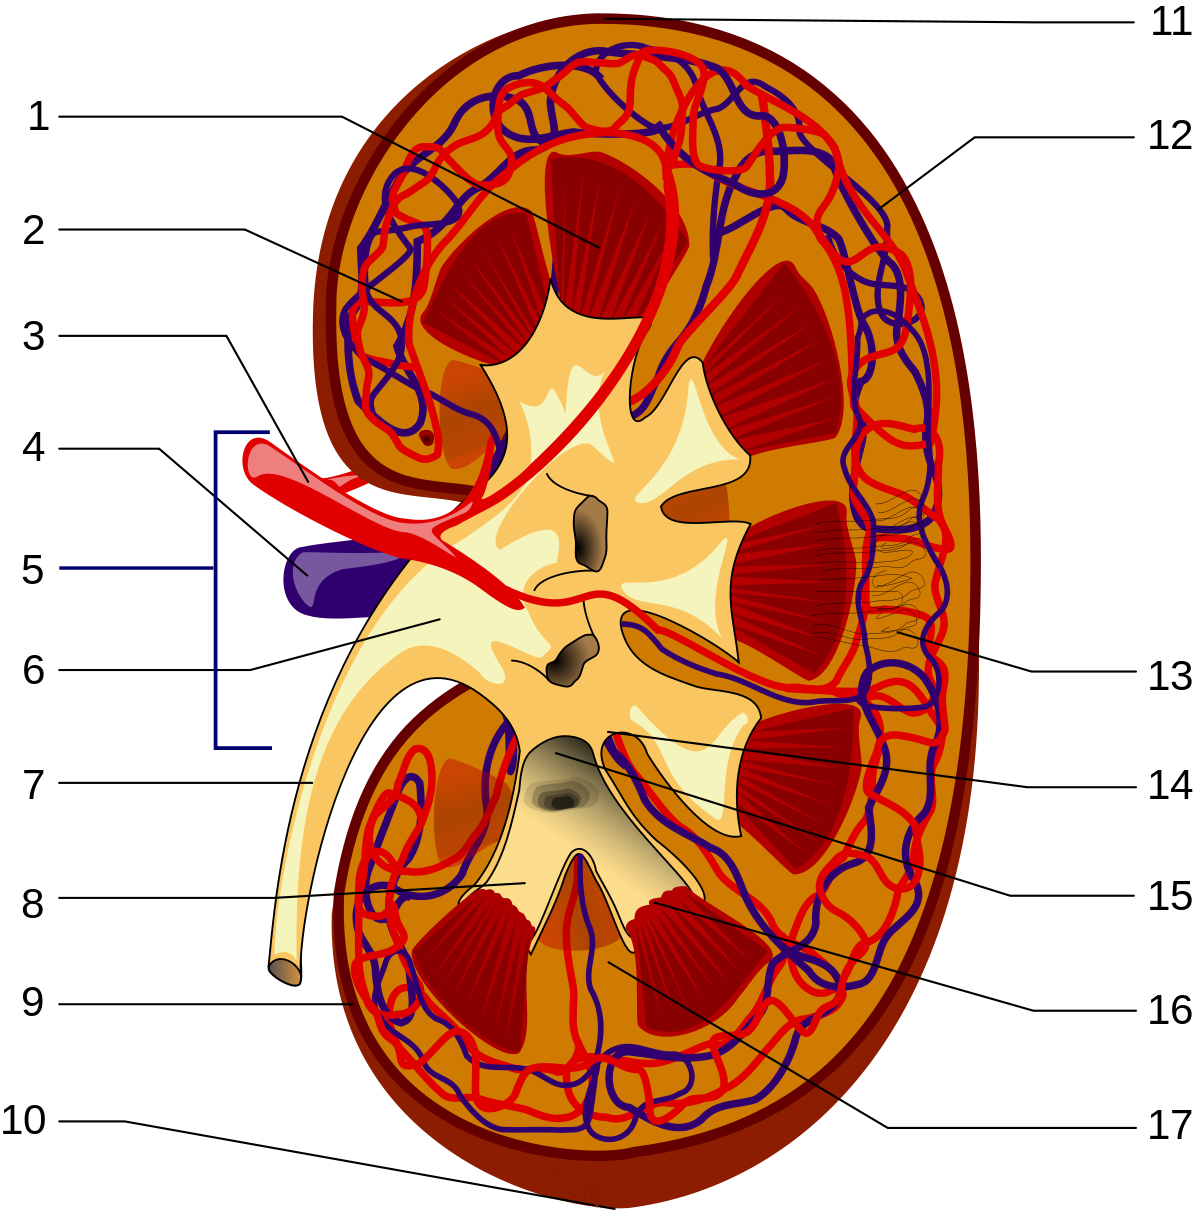 Nephrology wikipedia . Kidney clipart kidney function